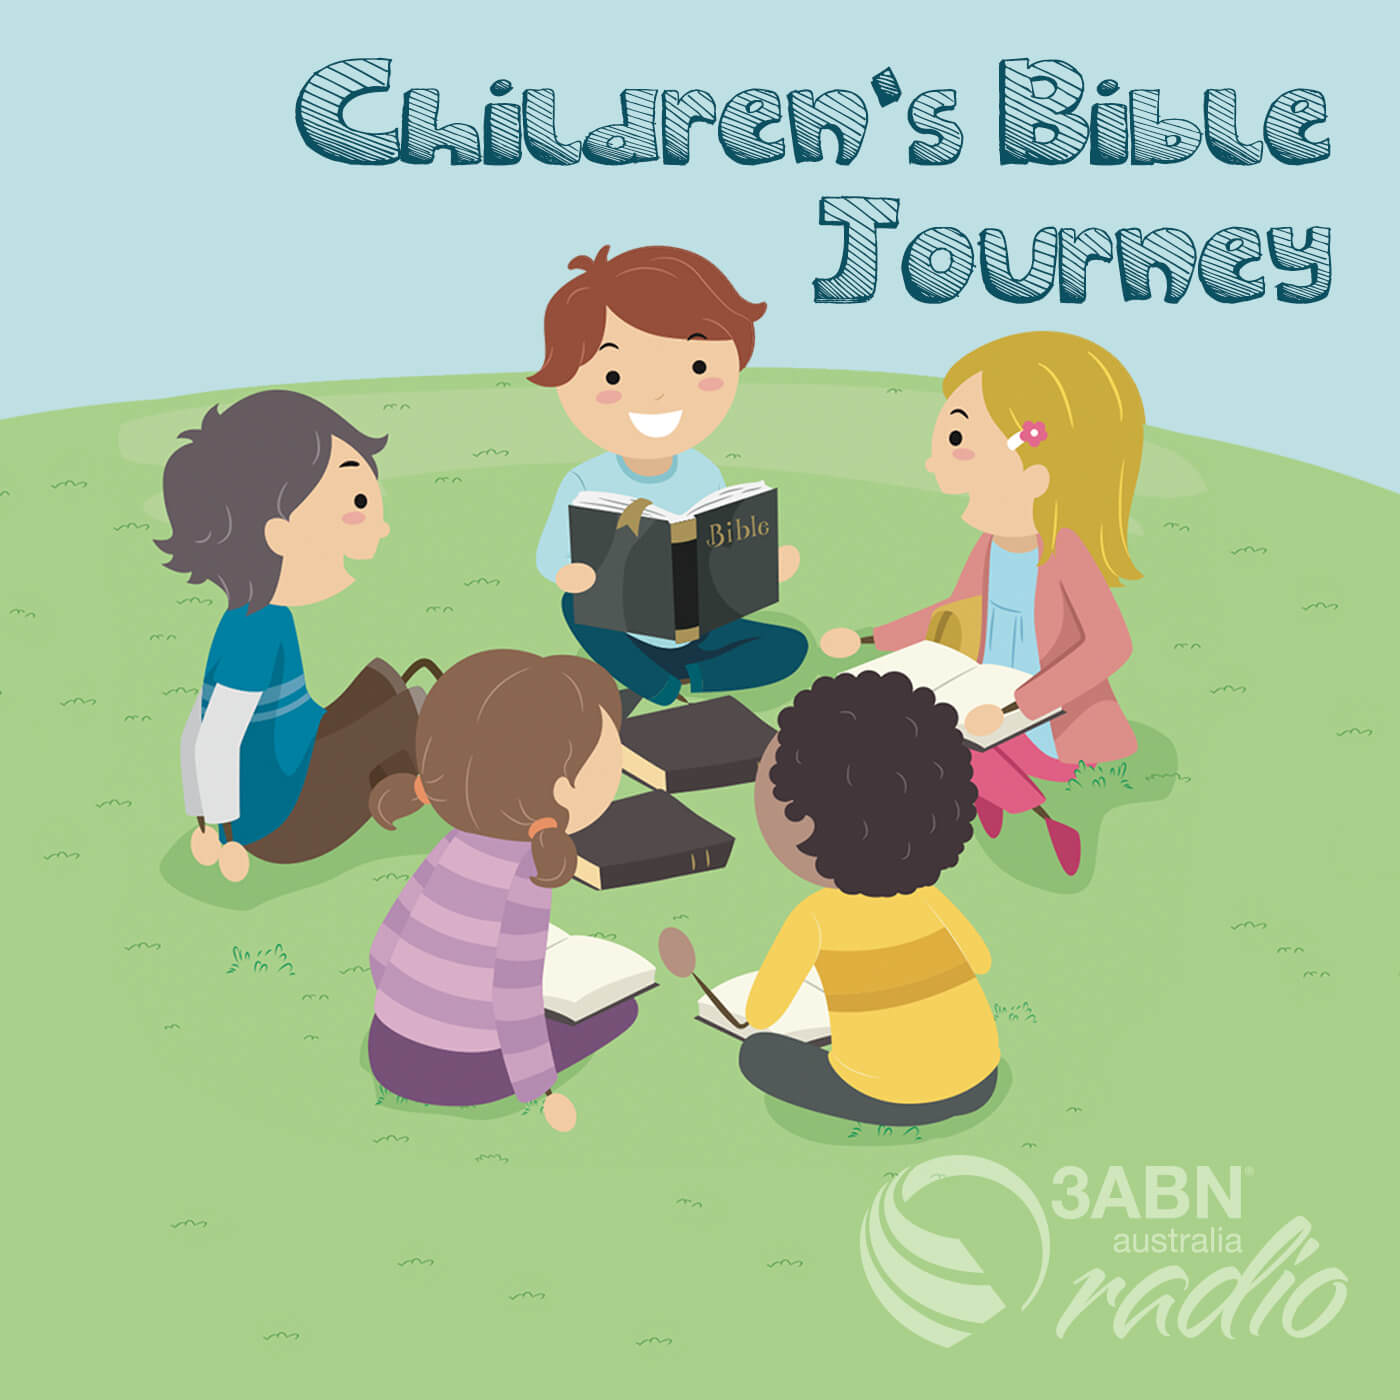 Children's Bible Journey - 2158